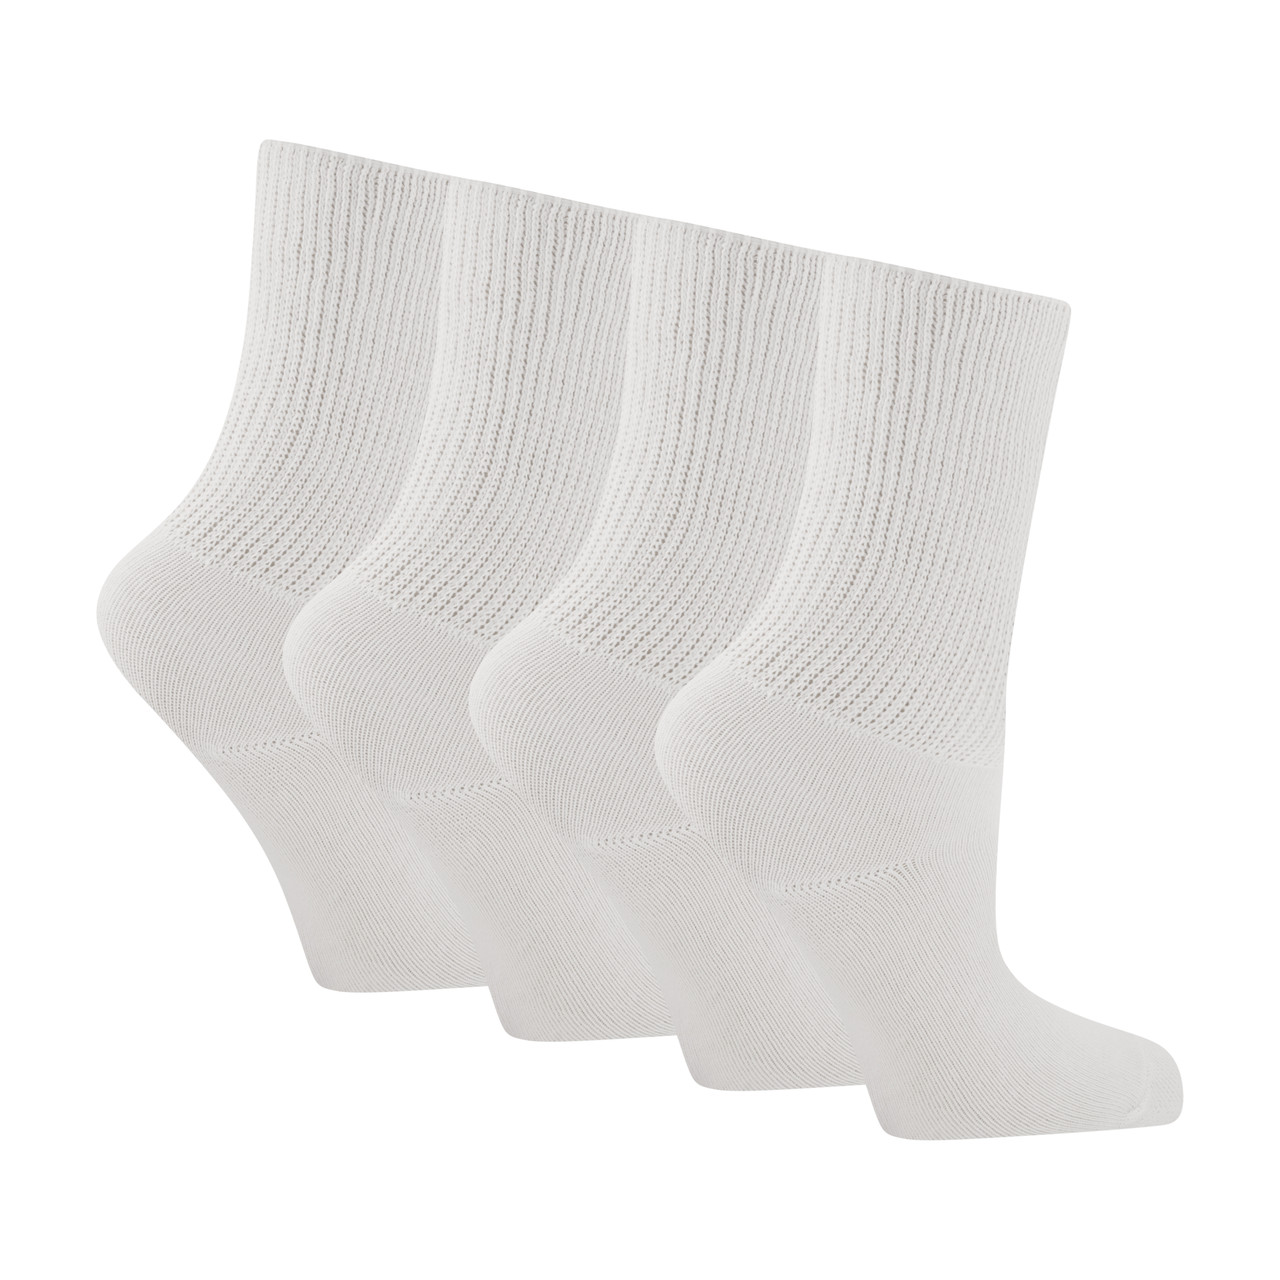 Wearever 6 Pair Pack of Diabetic Socks - Wearever Incontinence